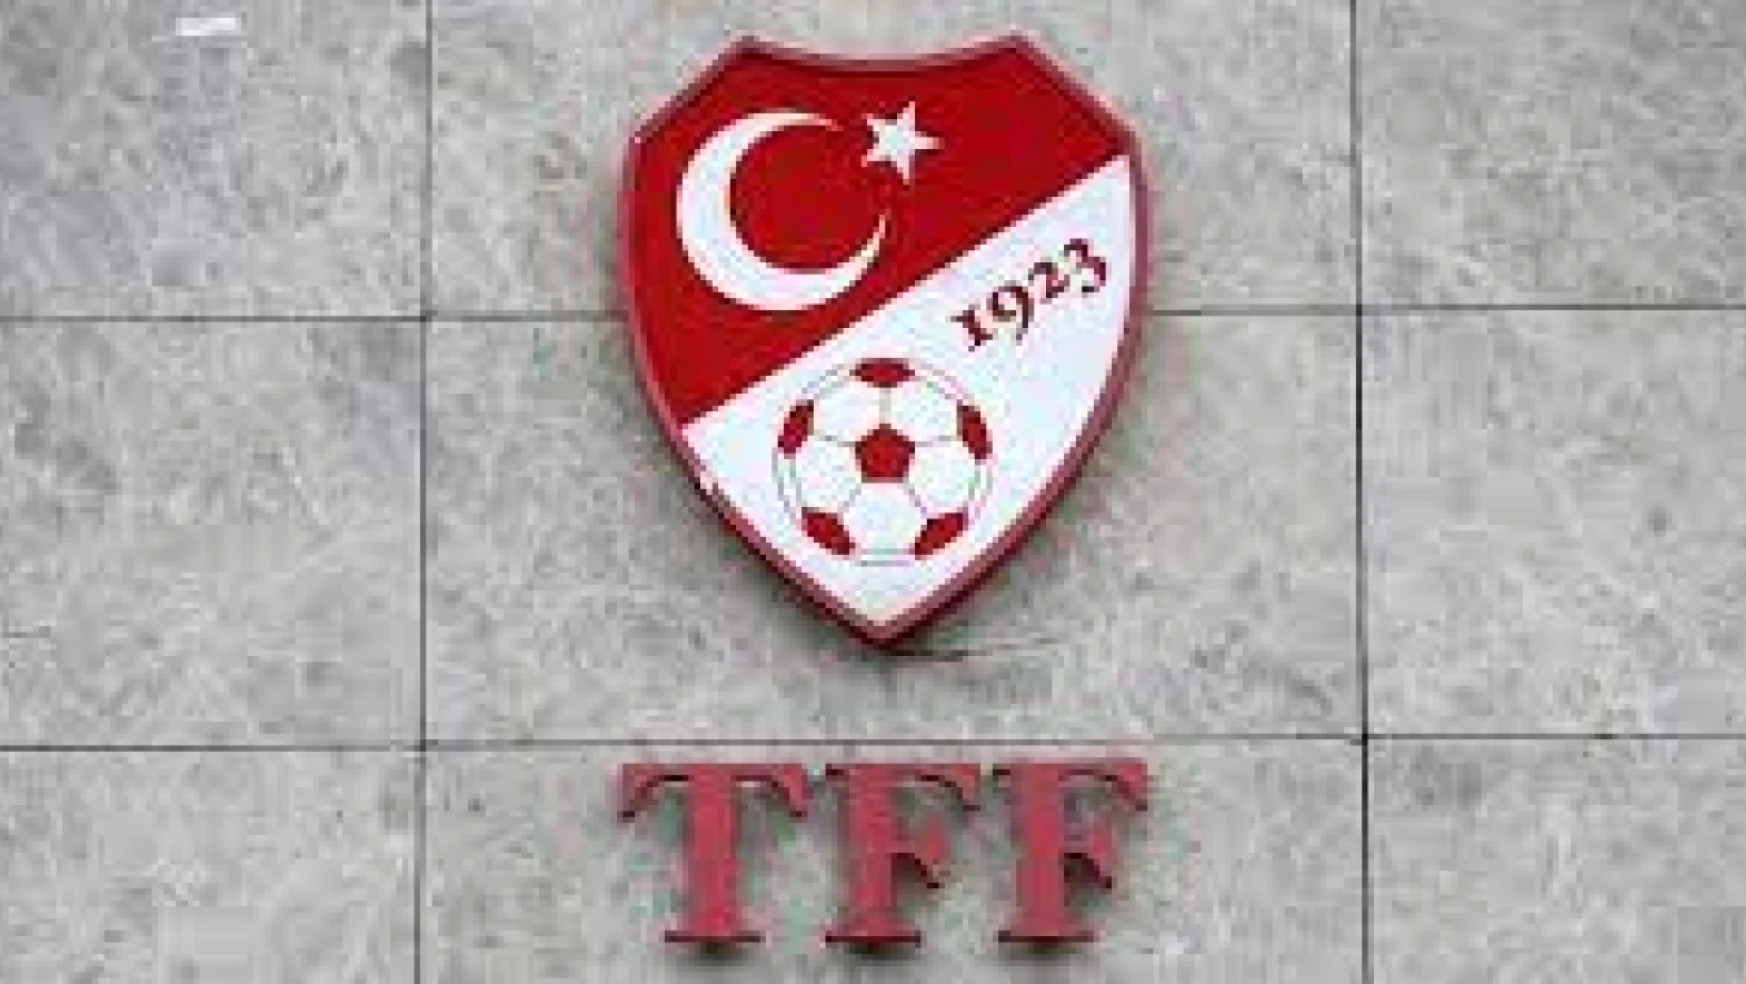 Süper Lig'den 11 kulüp, PFDK'ye sevk edildi